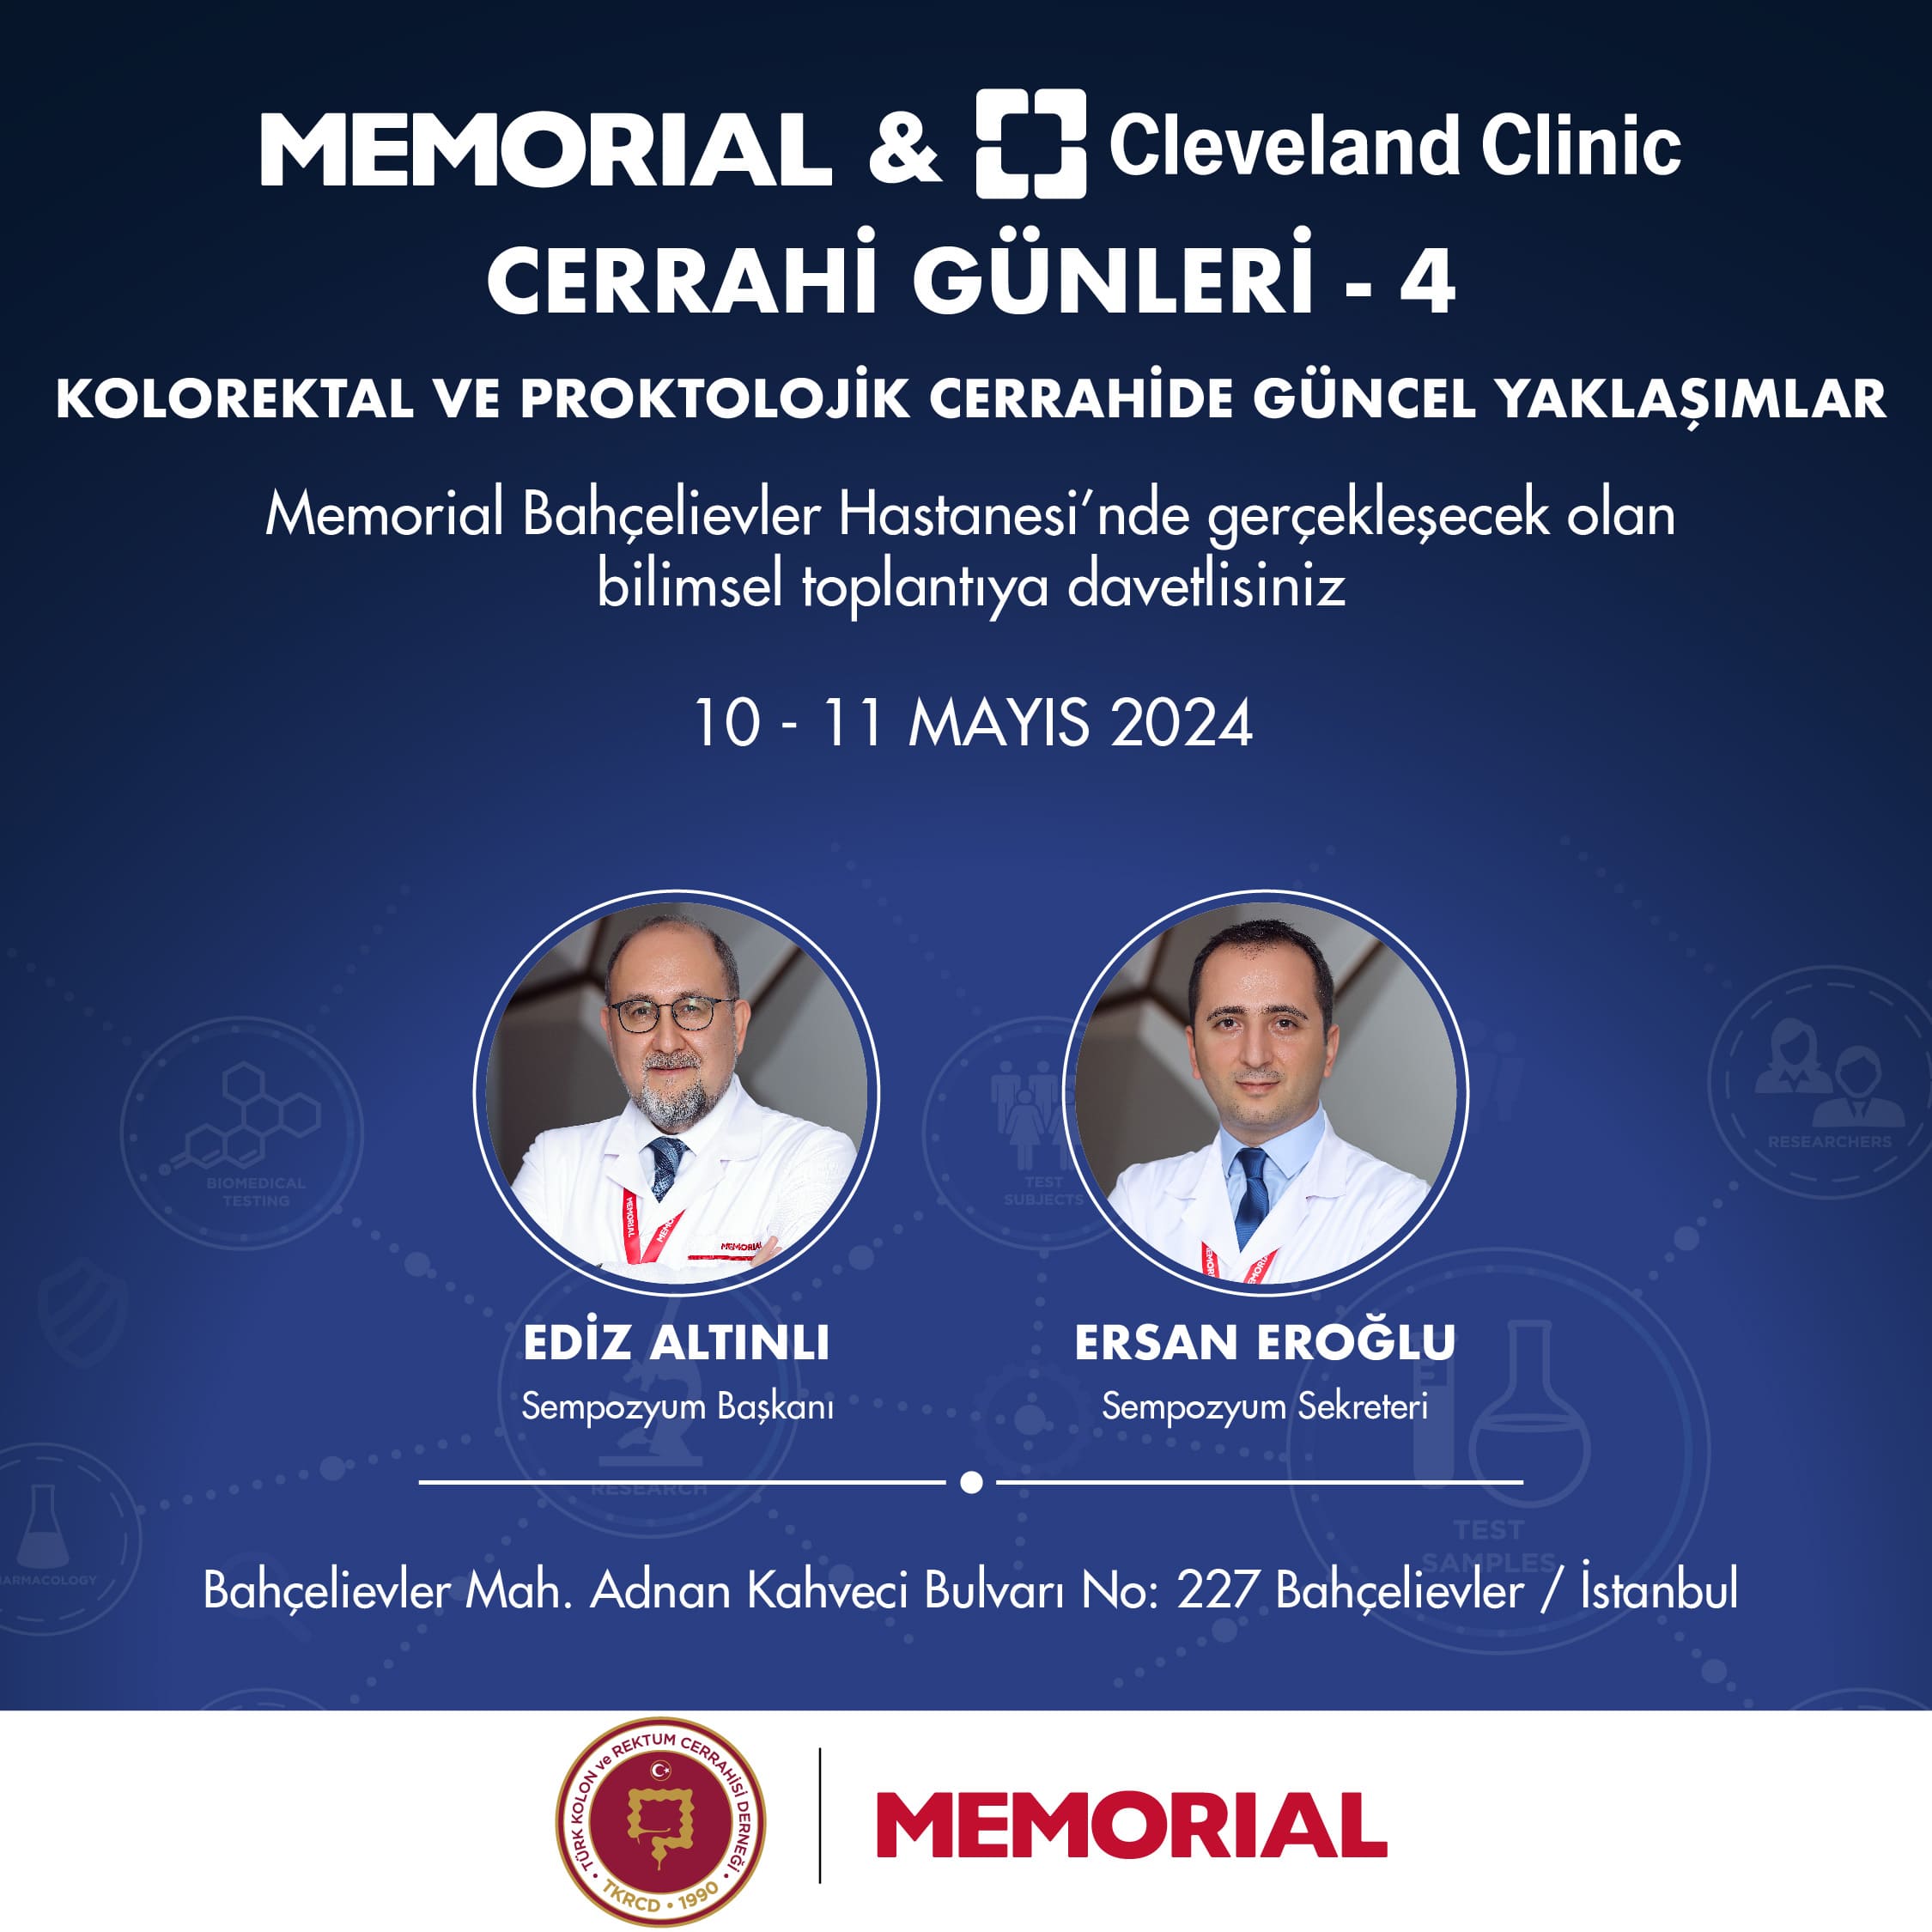 Memorial & Cleveland Clinic Cerrahi Günleri - 4